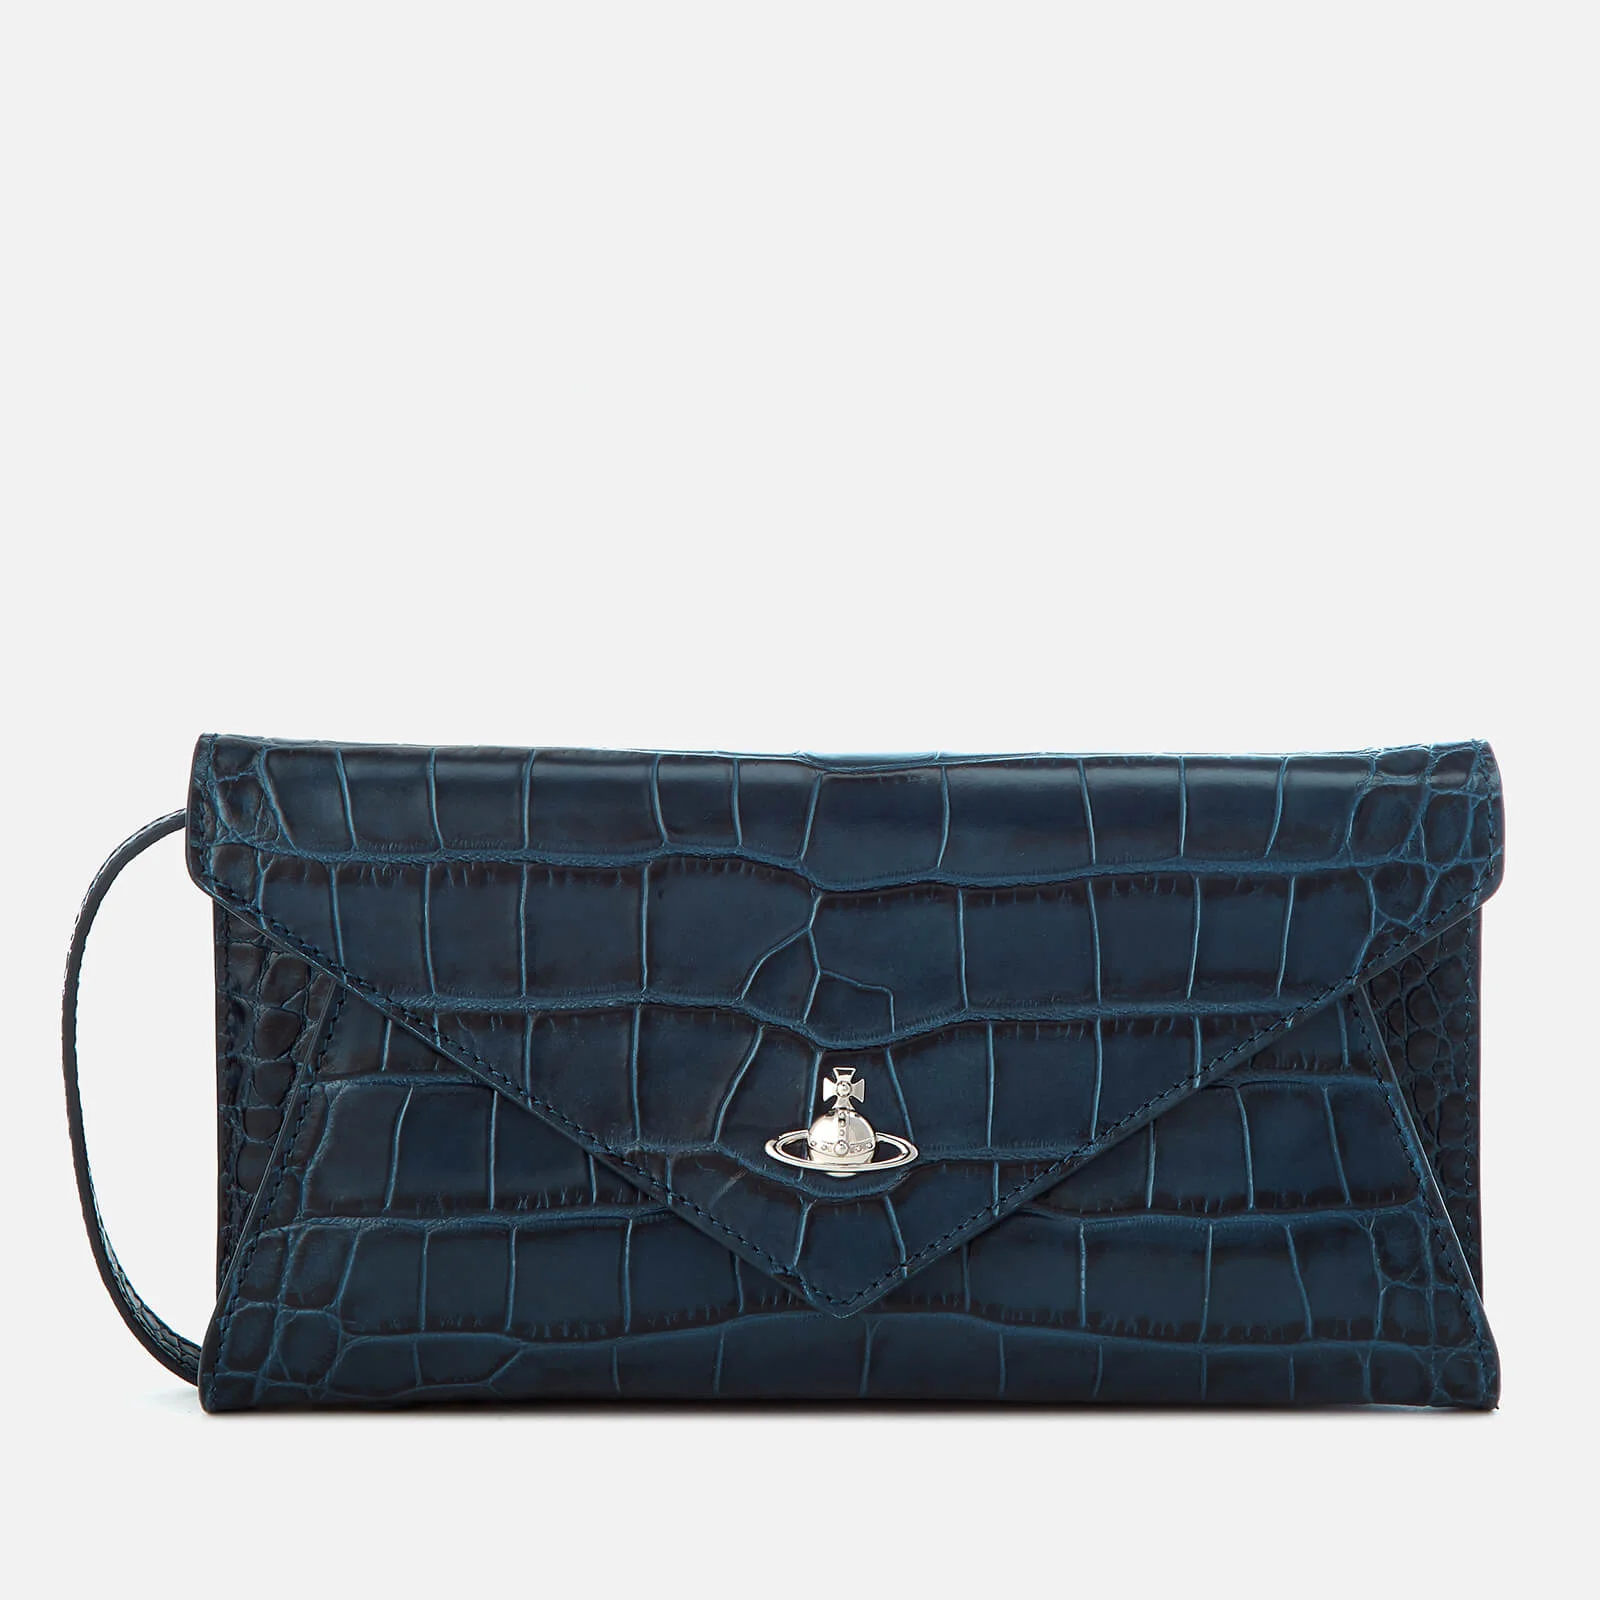 Vivienne Westwood Women's Lisa Envelope Clutch Bag - Blue Image 1